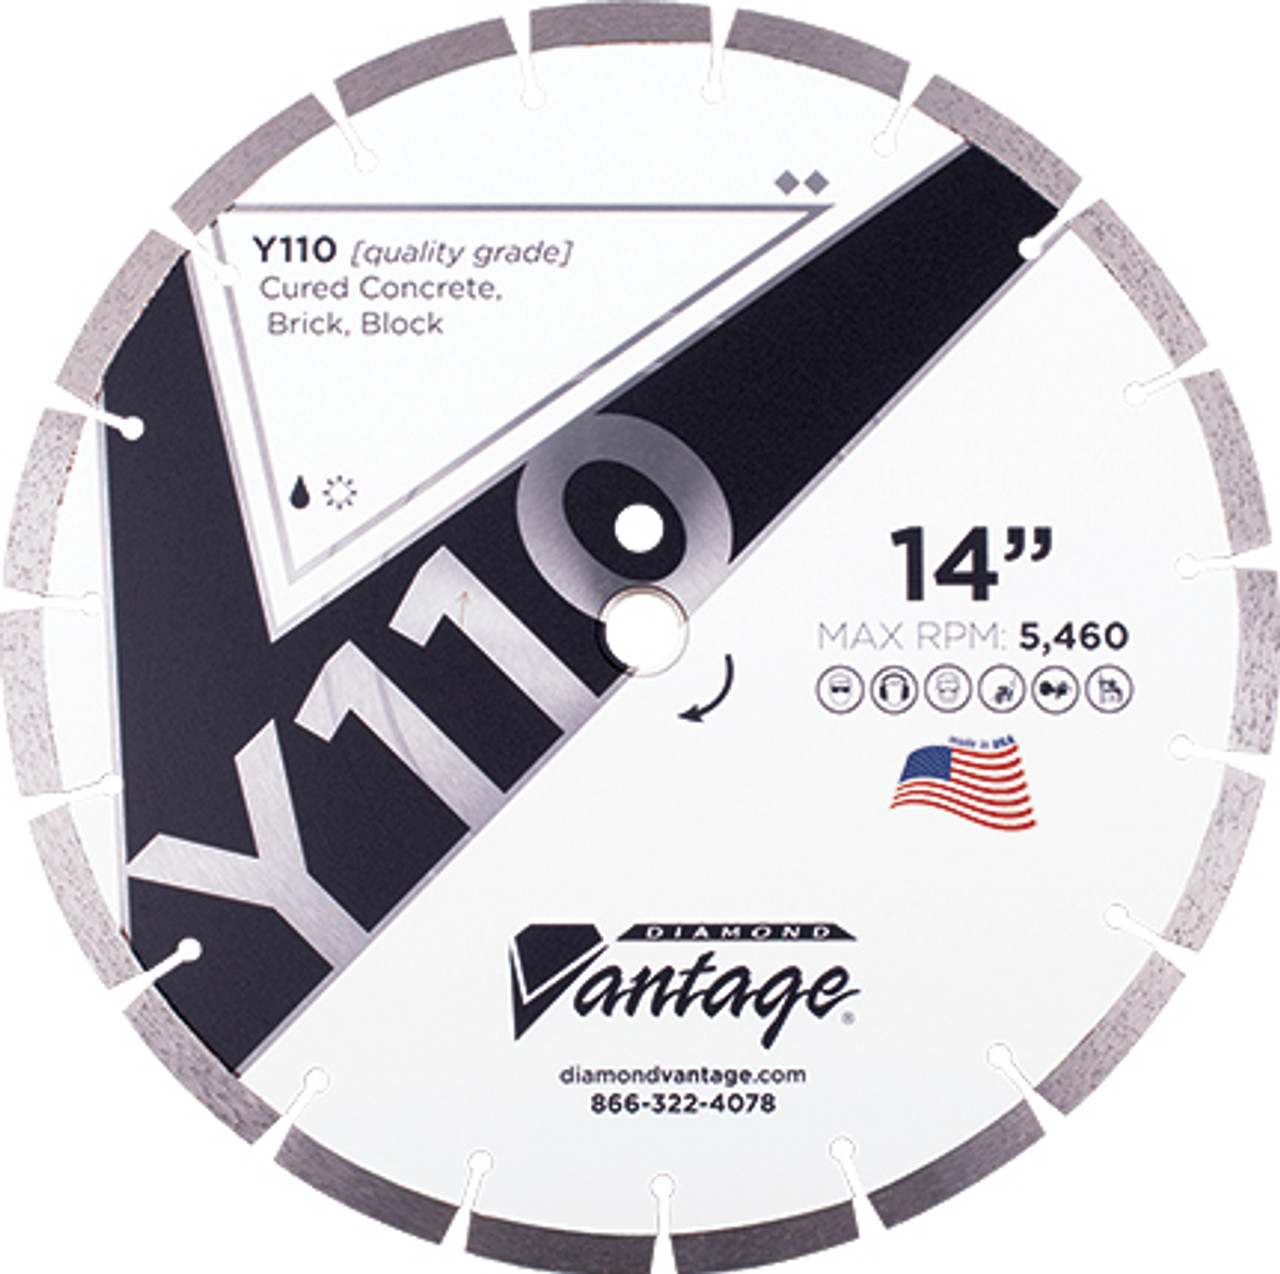 Diamond Vantage Y110 SERIES 16 x .125 x 20mm Conc/Mas, Value Plus Grade, Segmented Blade